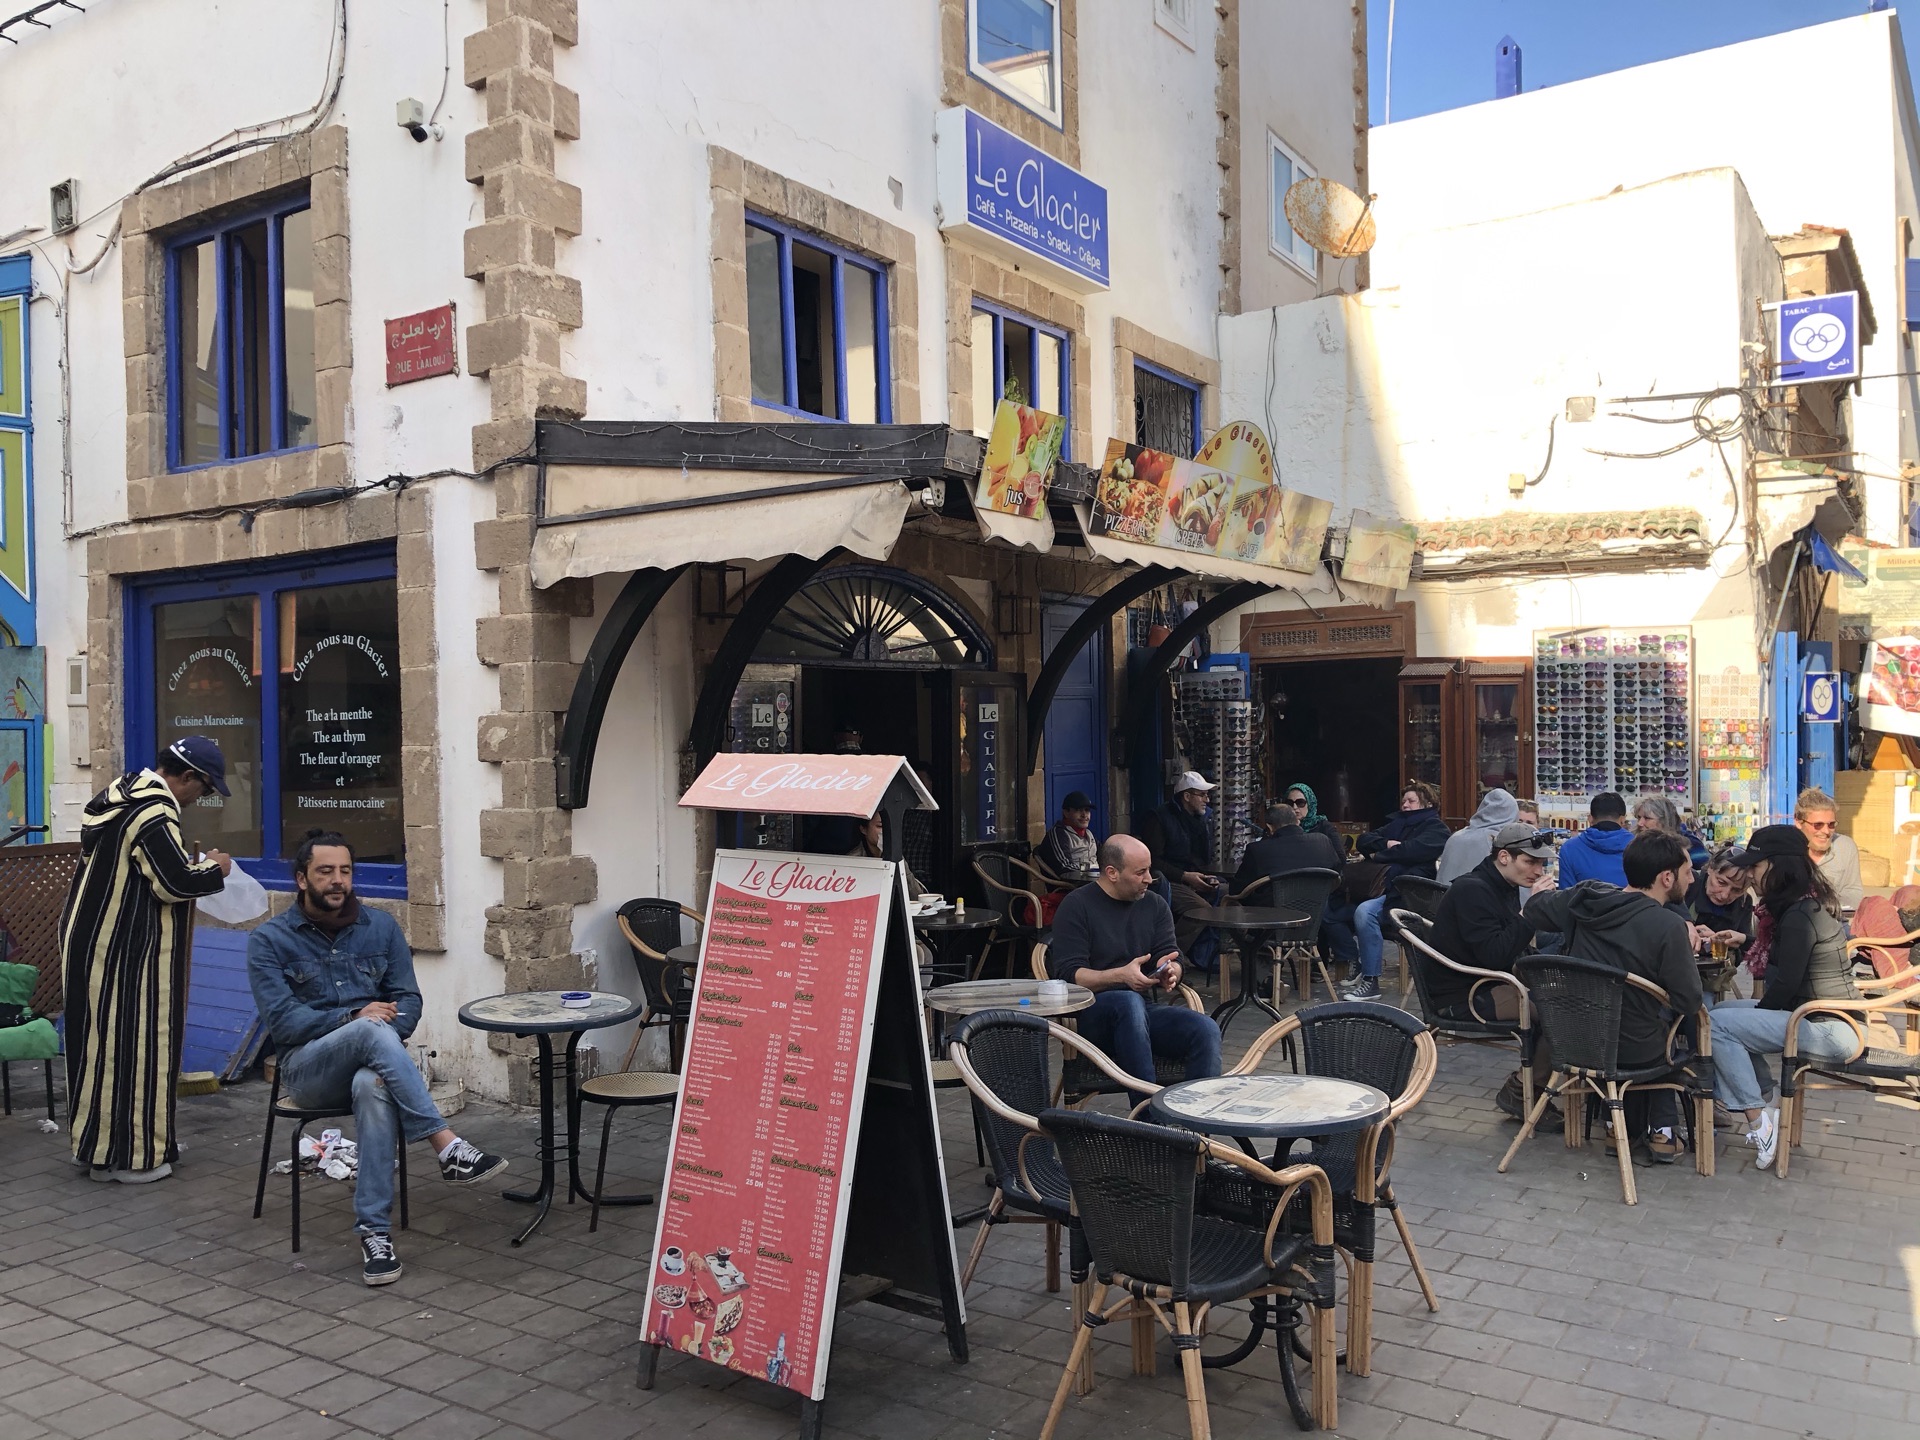 LE GLACIER restaurants, addresses, phone numbers, photos, real user  reviews, Avenue Sidi Mohamed Ben Abdellah, Essaouira 44000, Morocco,  Essaouira restaurant recommendations - Trip.com